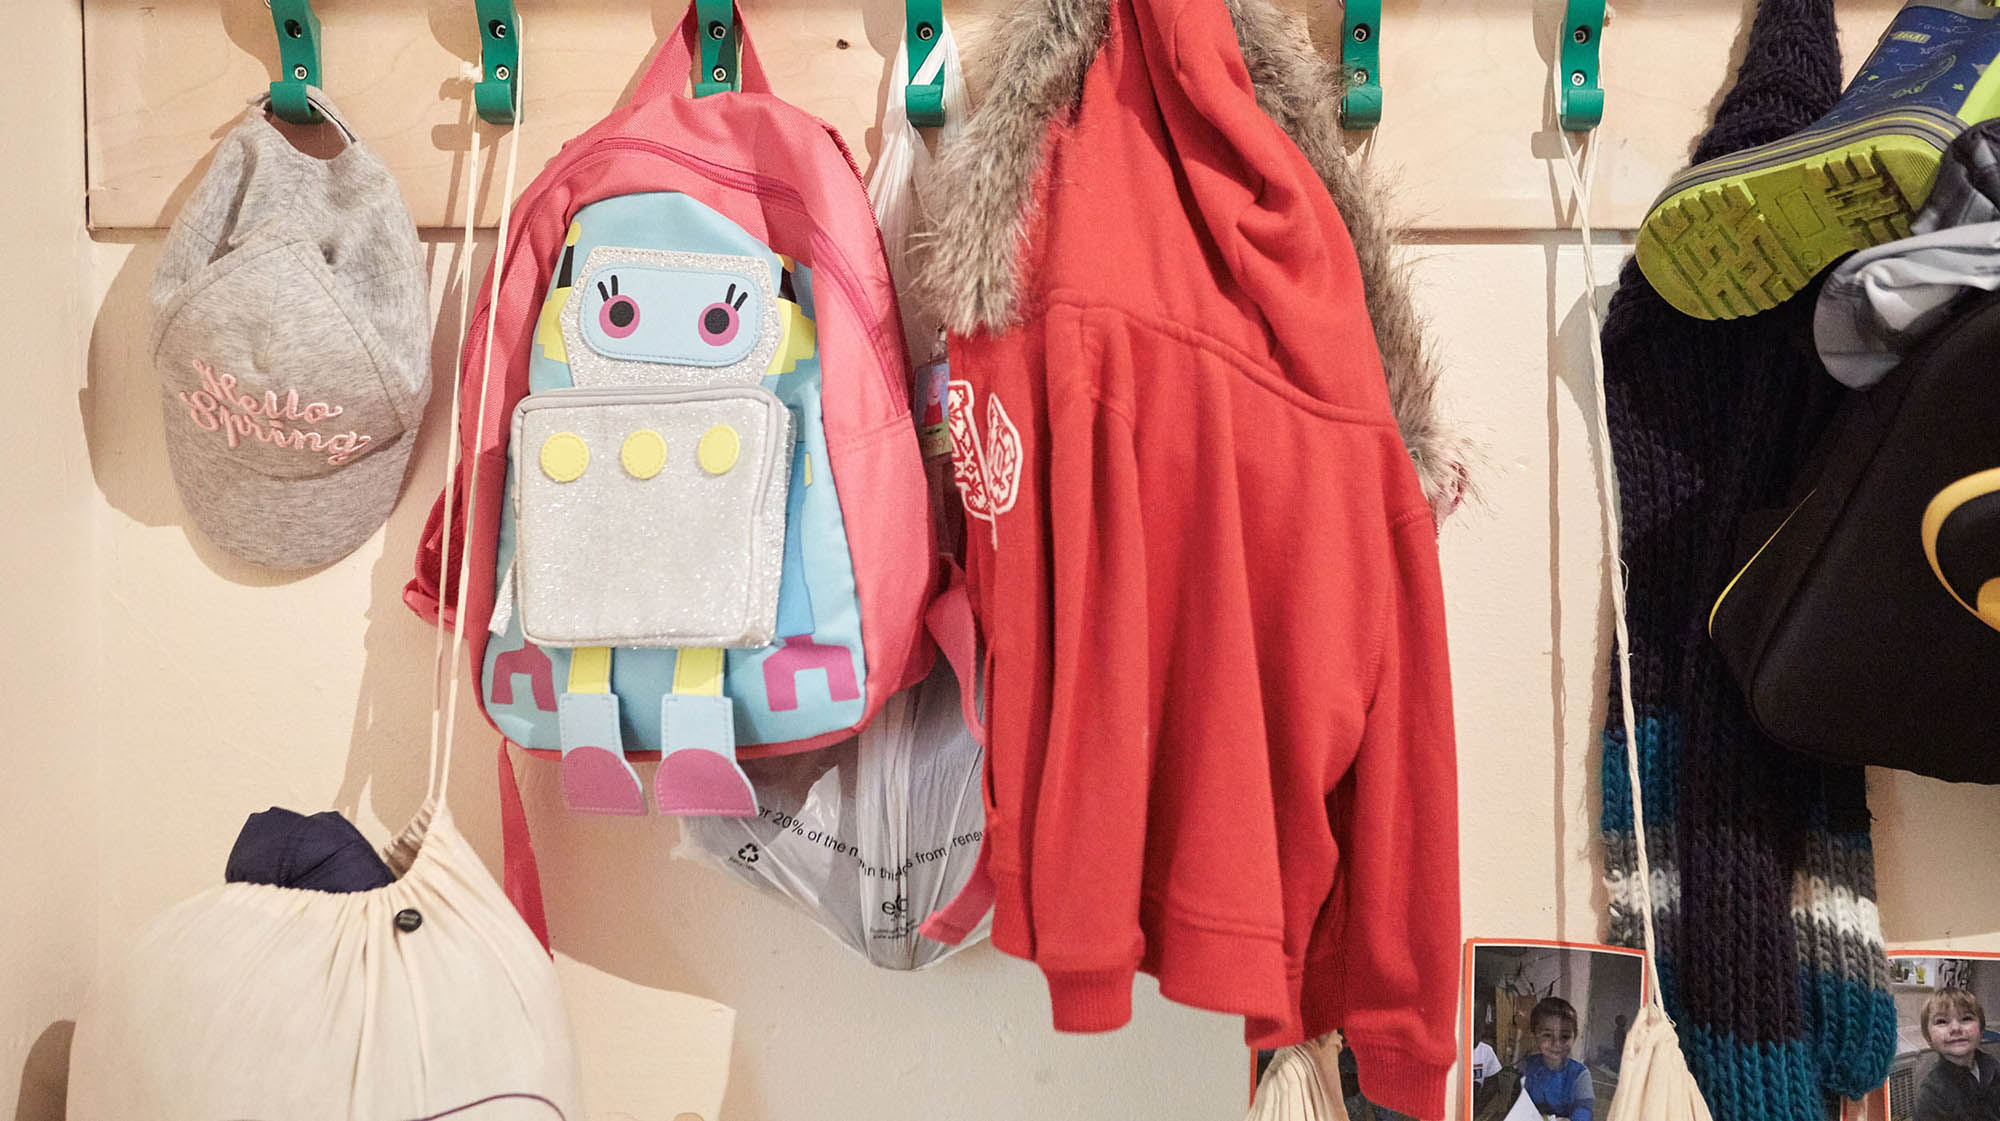 Children's backpacks and coats hanging up on coat rack